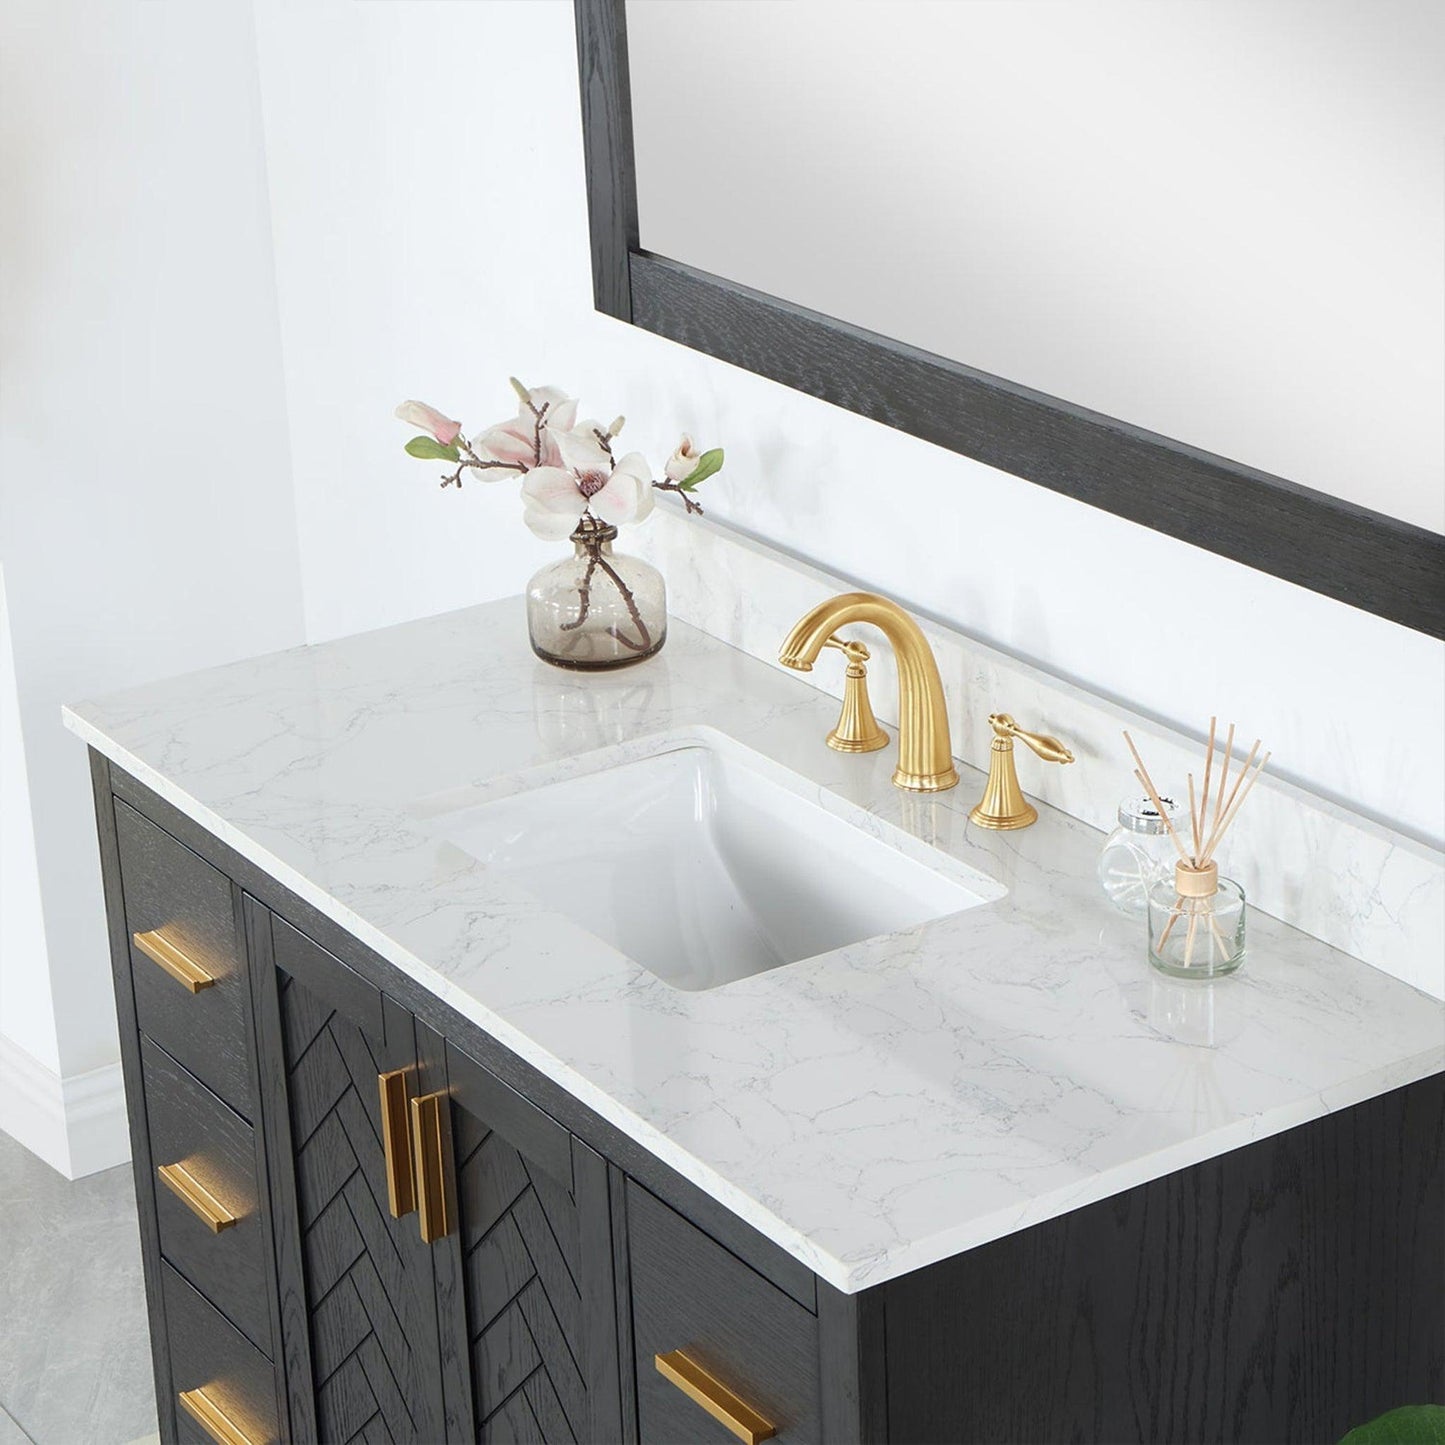 Altair Gazsi 48" Brown Oak Freestanding Single Bathroom Vanity Set With Mirror, Elegant Composite Grain White Stone Top, Rectangular Undermount Ceramic Sink, Overflow, and Backsplash